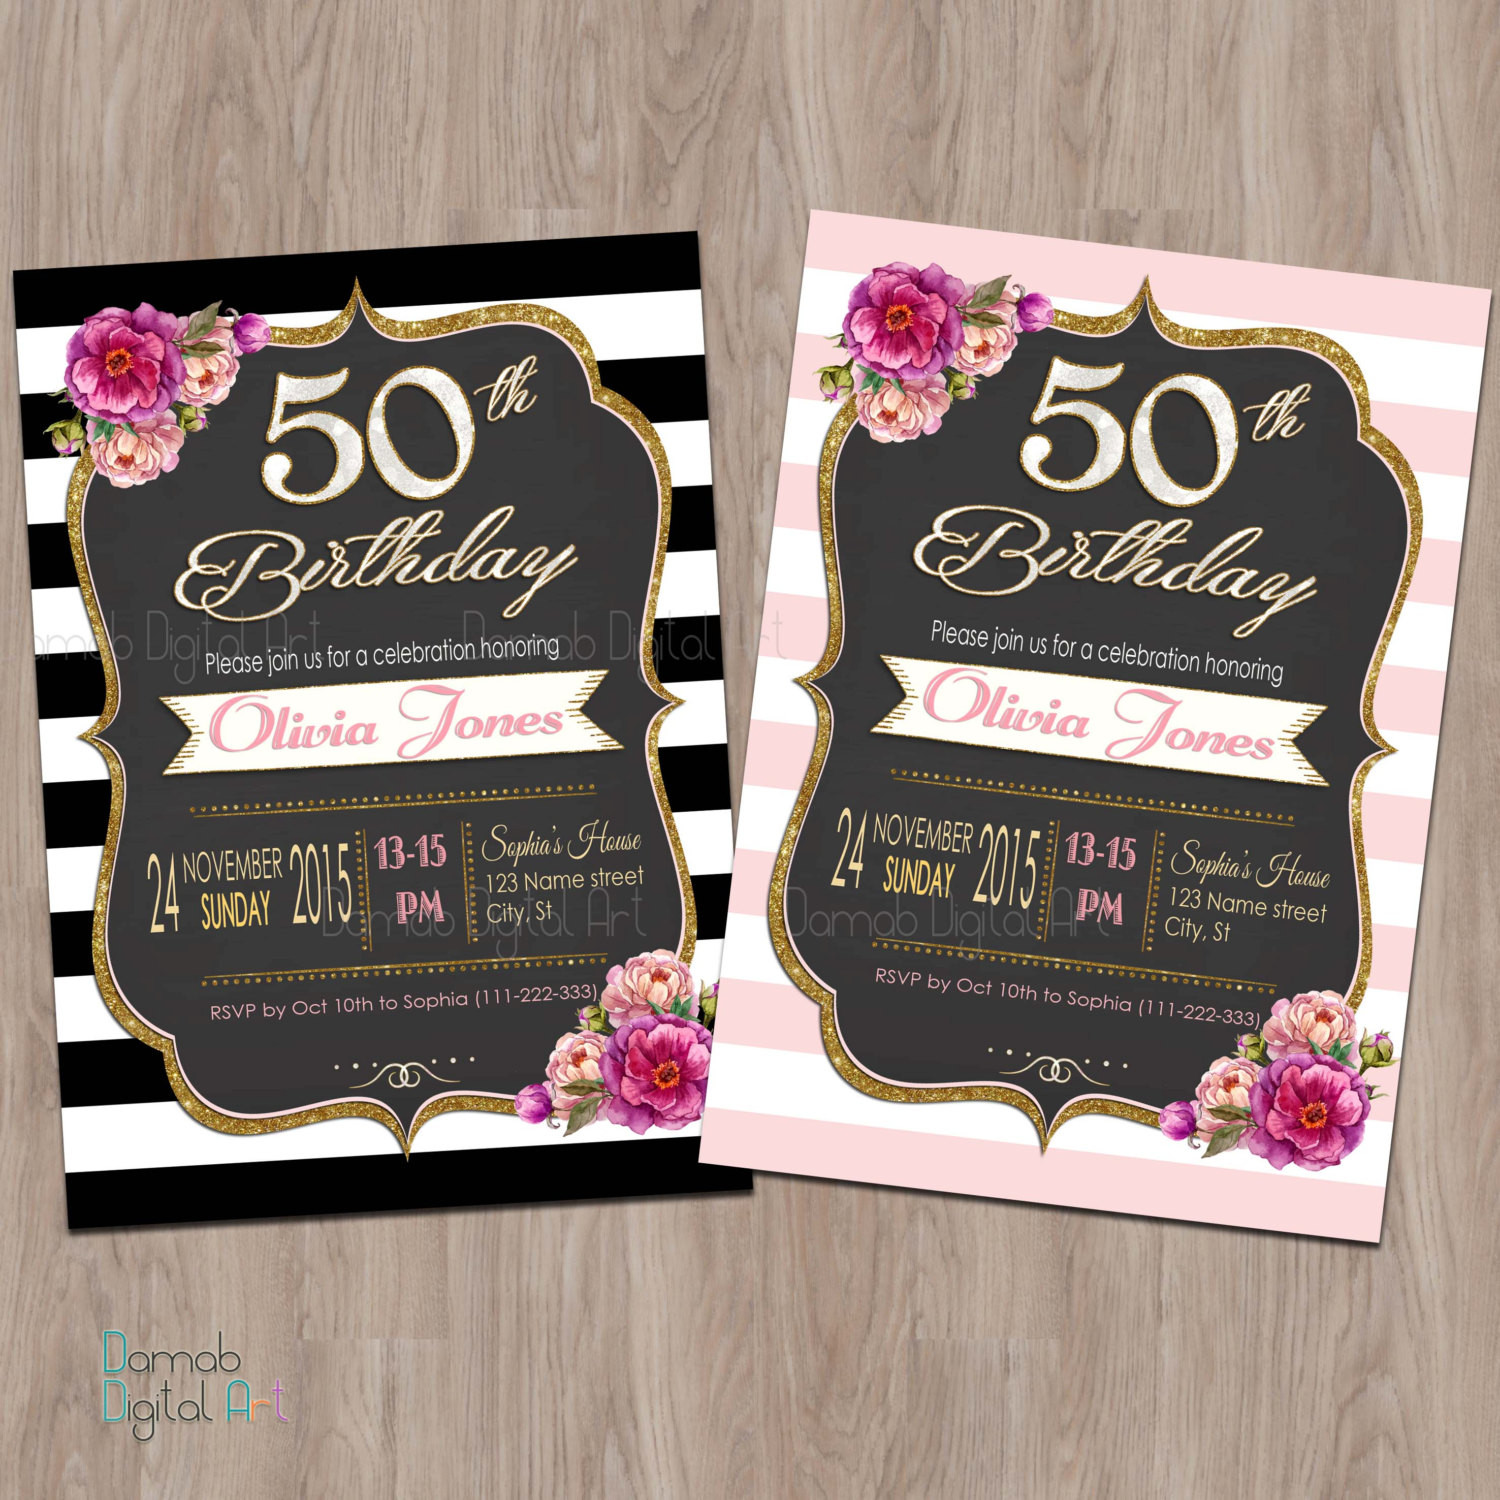 50 Birthday Party Invitations
 50th Birthday Invitation 50th Birthday Invitation for Women